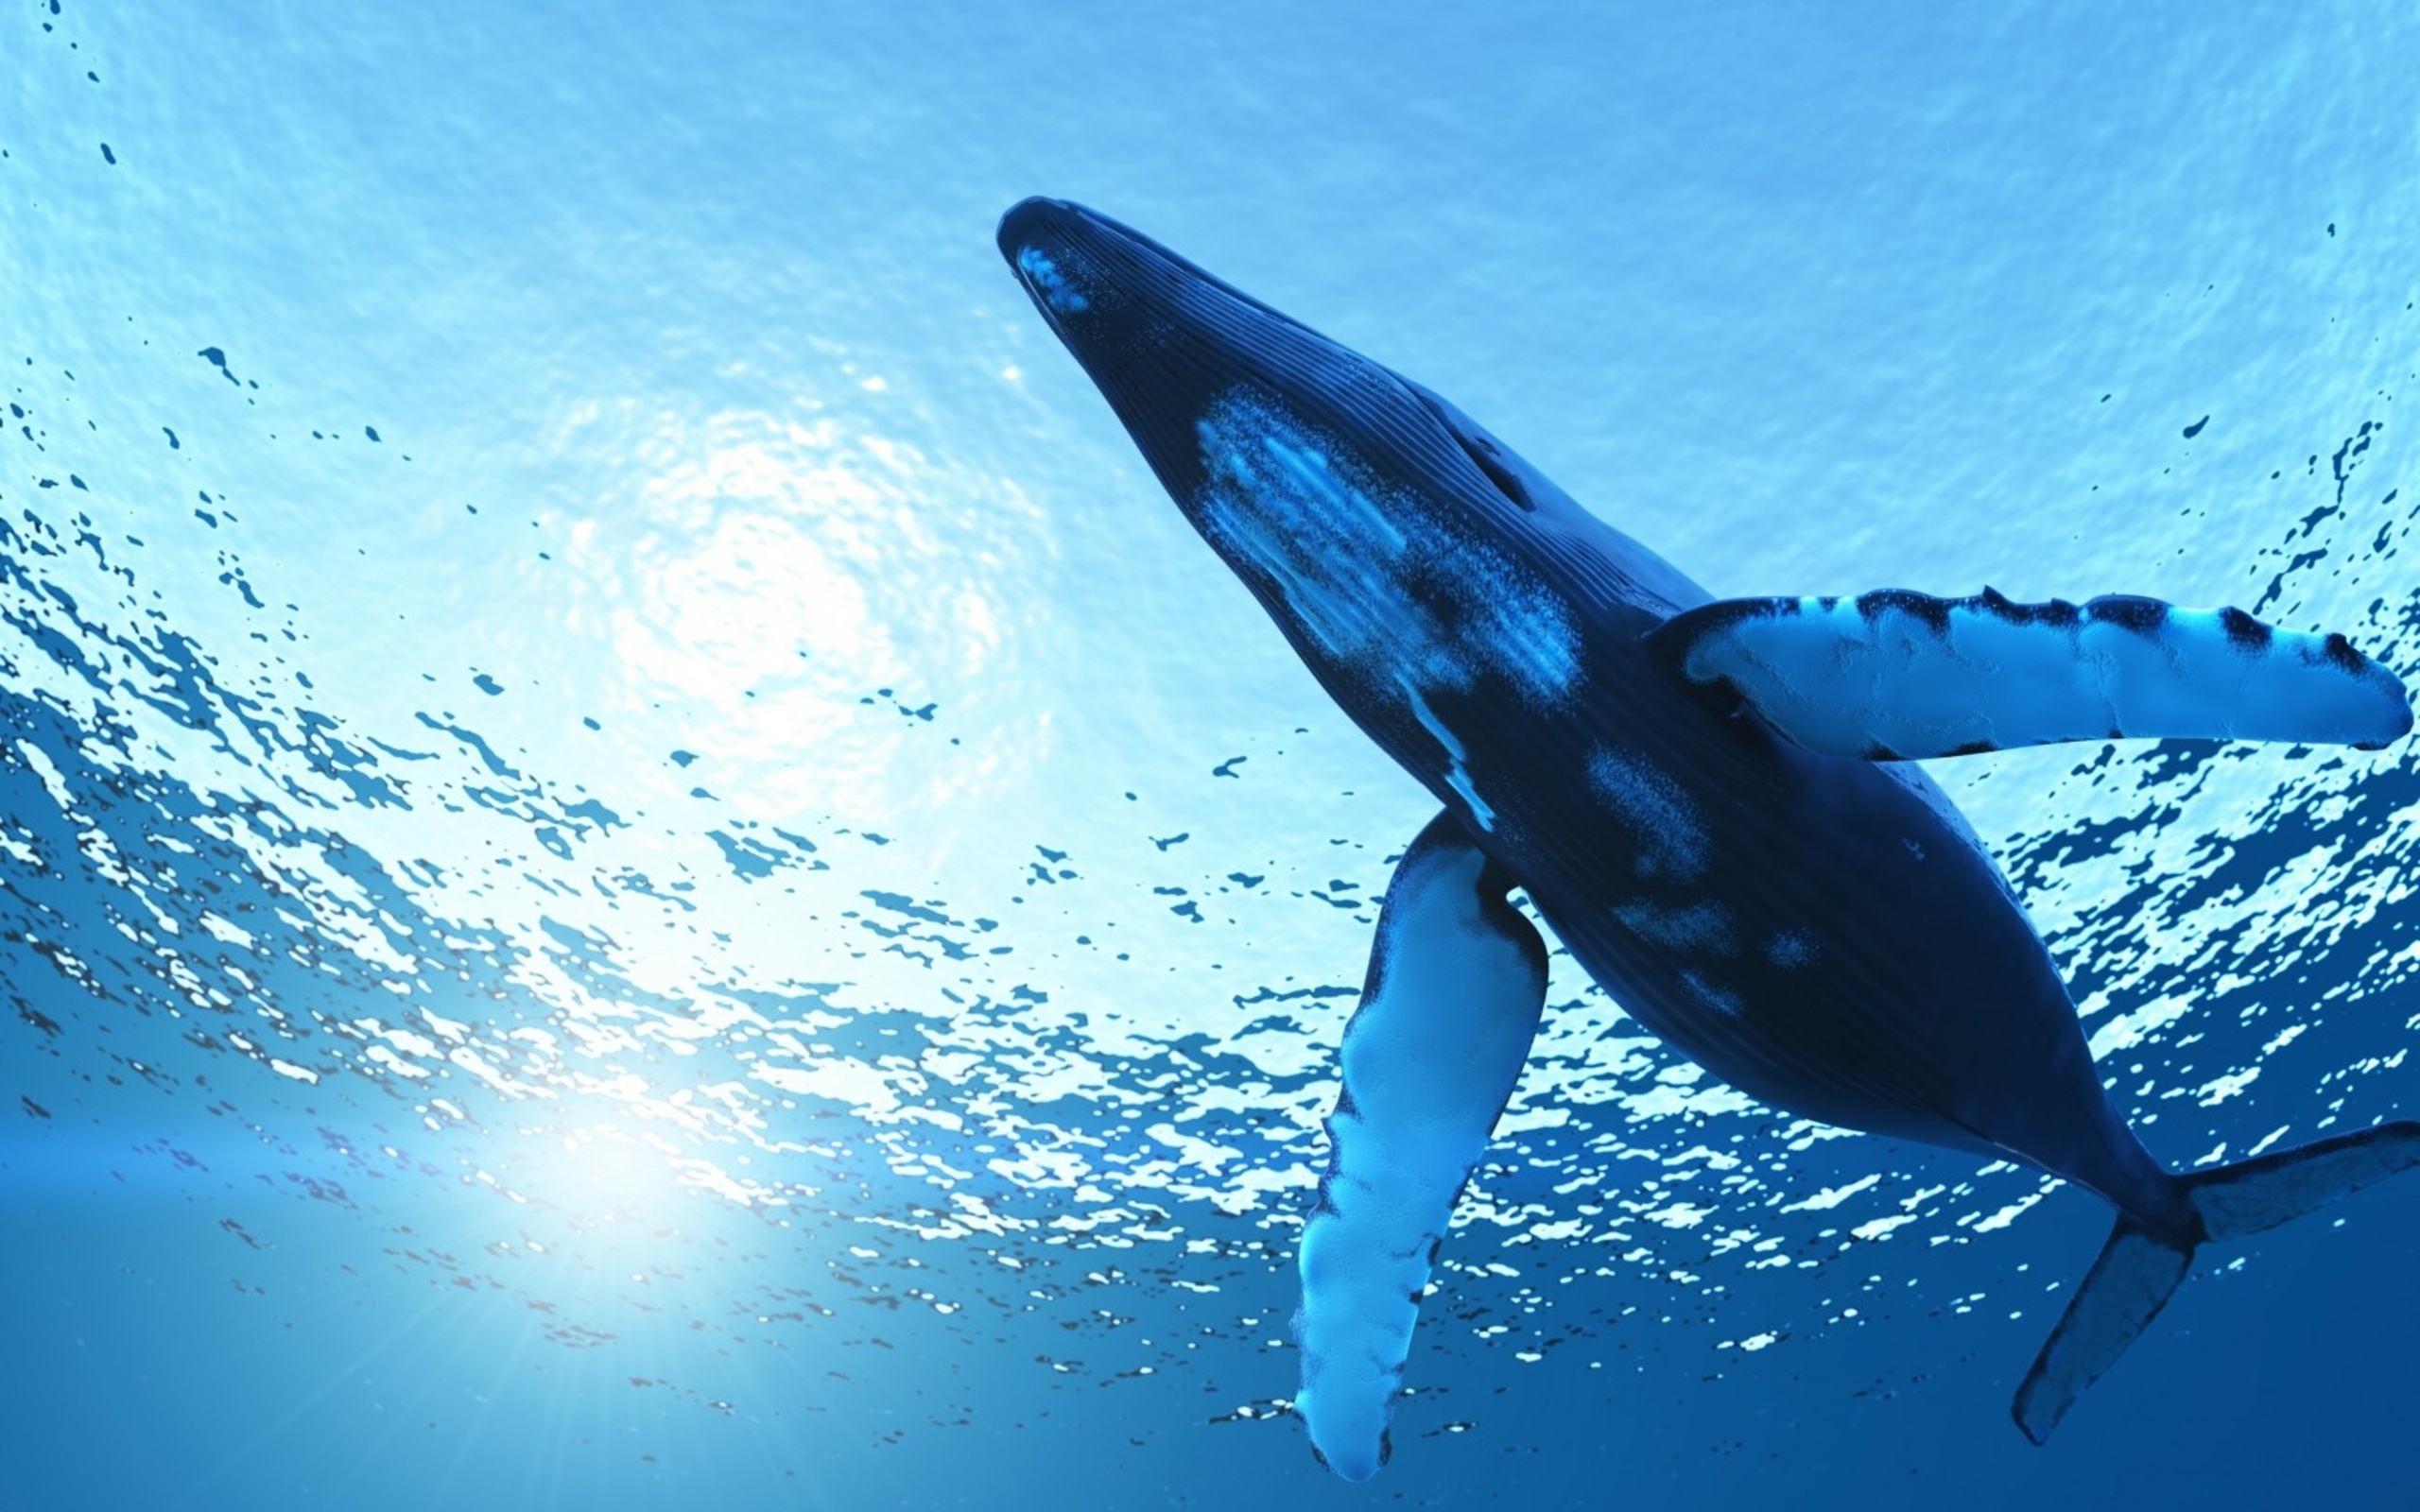 Whale desktop wallpaper